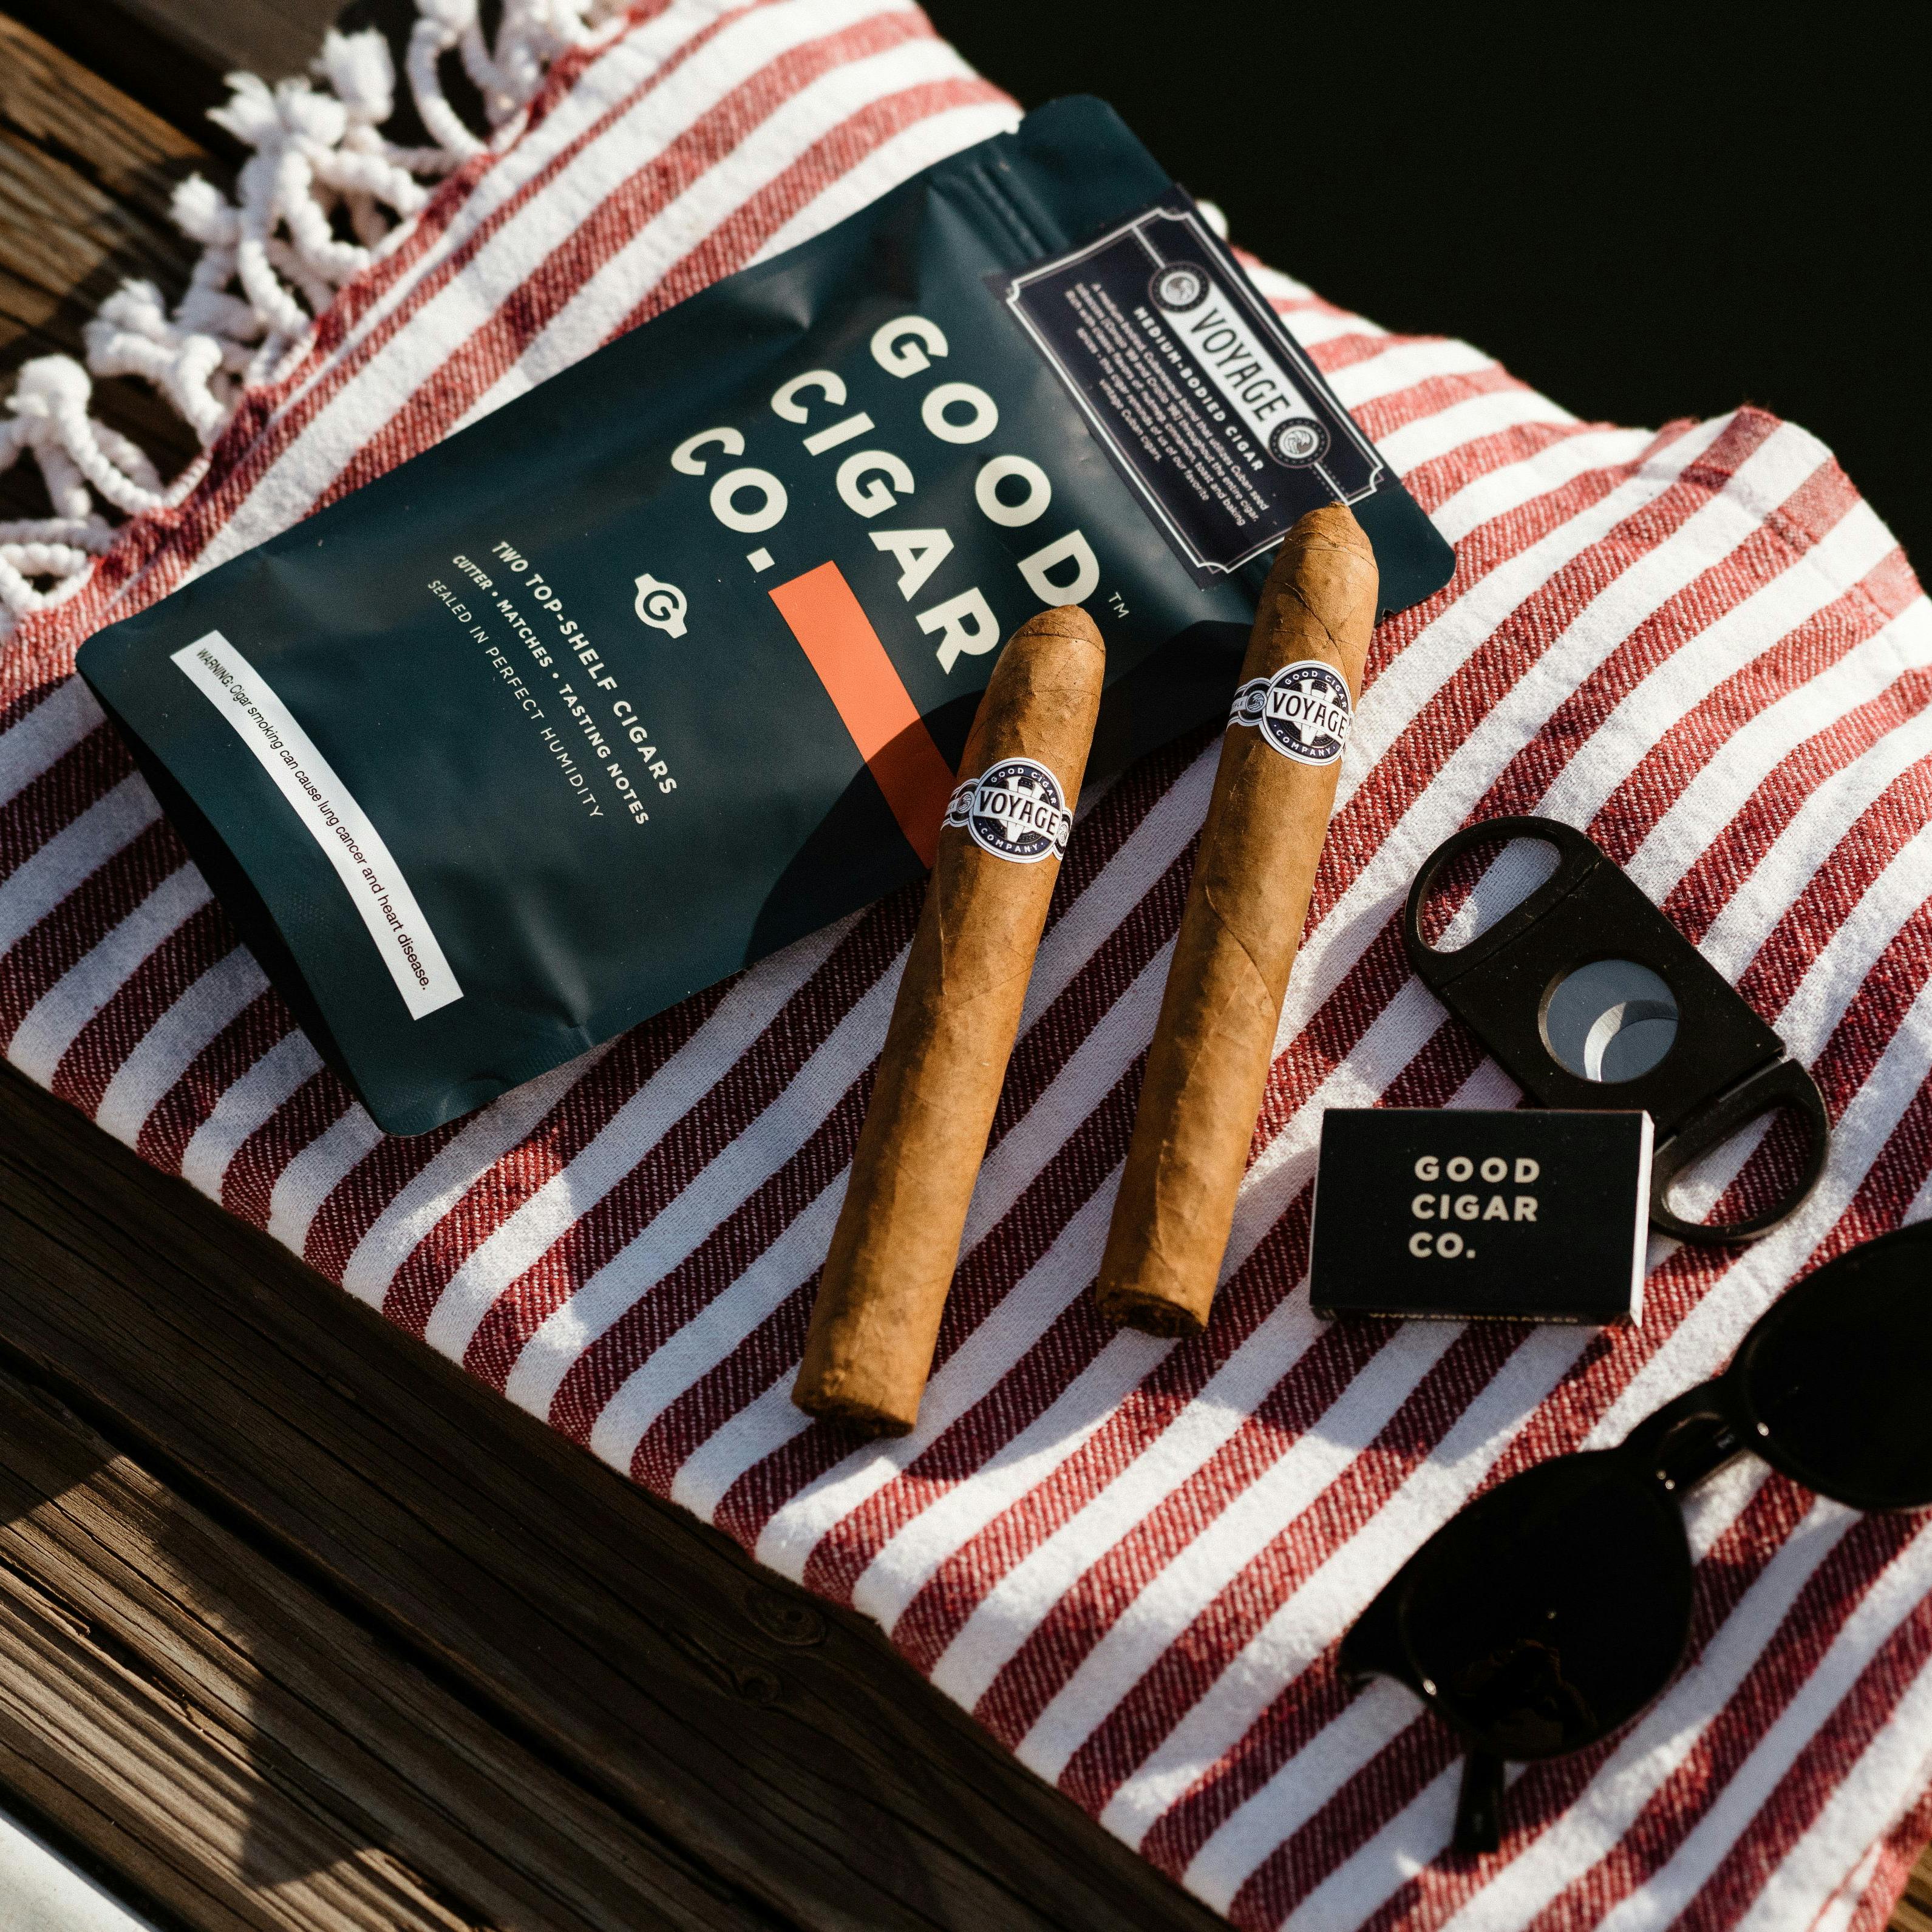 Good Cigar Co. 2 Pack of Cigars - Voyage (Medium)